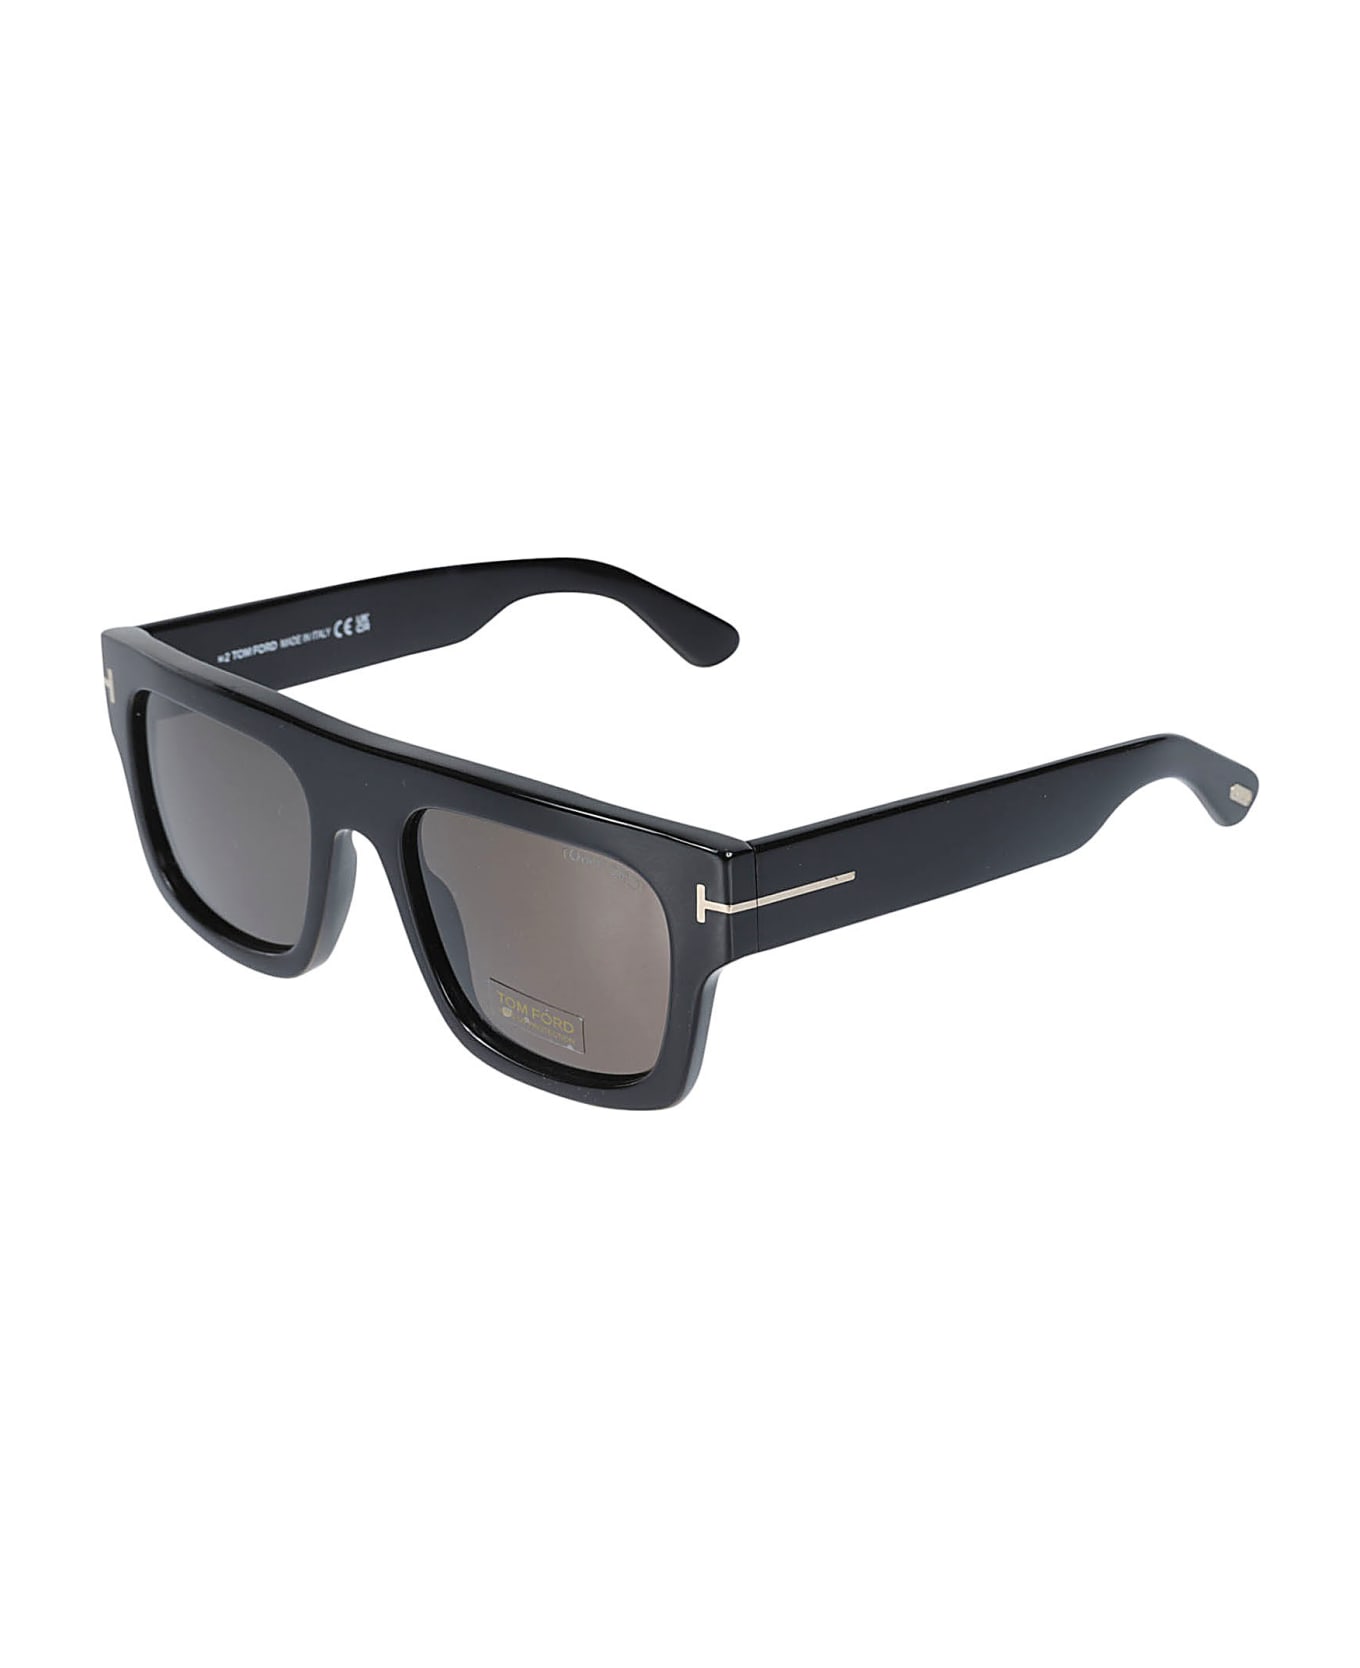 Tom Ford Eyewear Fausto Geometric Sunglasses - 01A サングラス